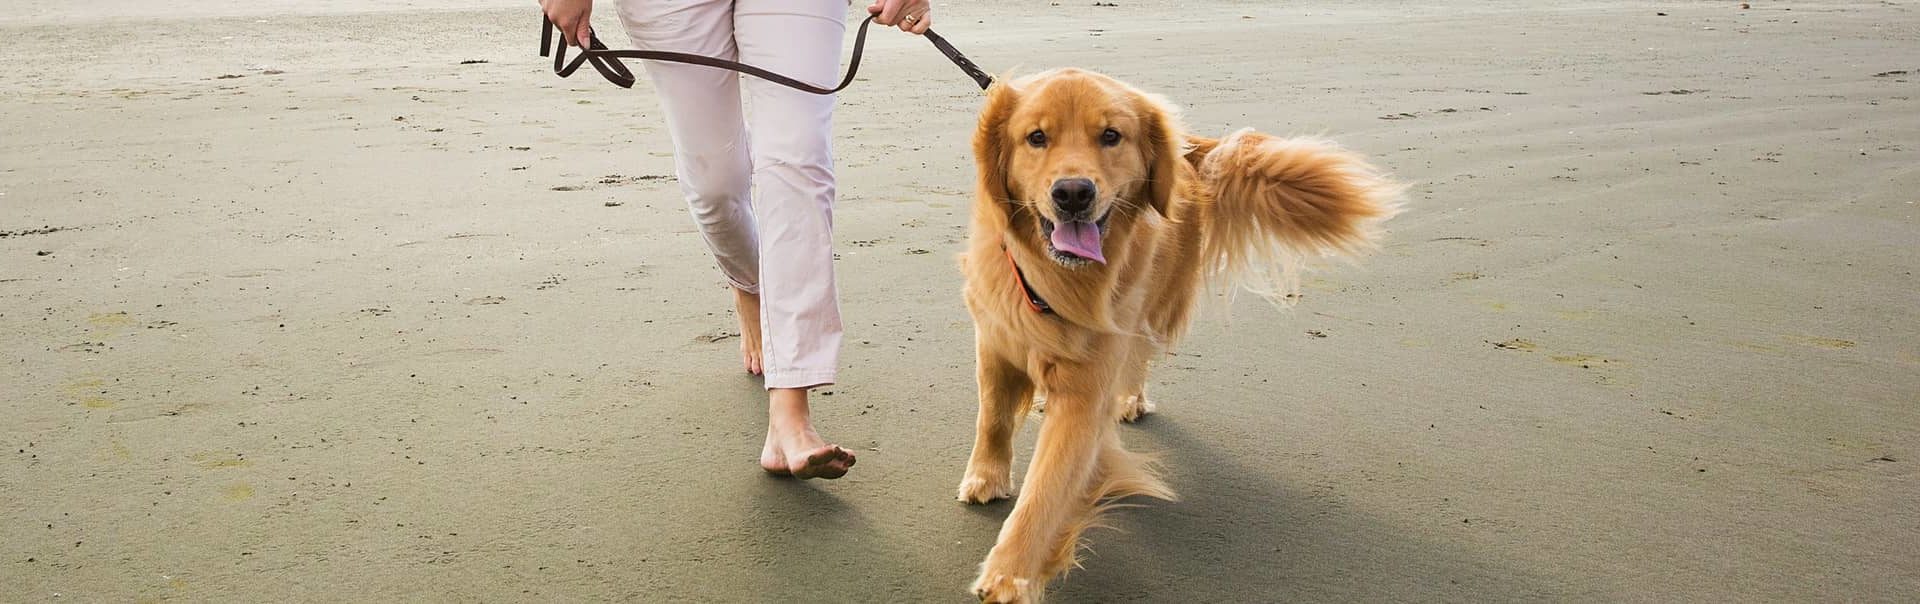 Golden retriever walking on a leash on the beach